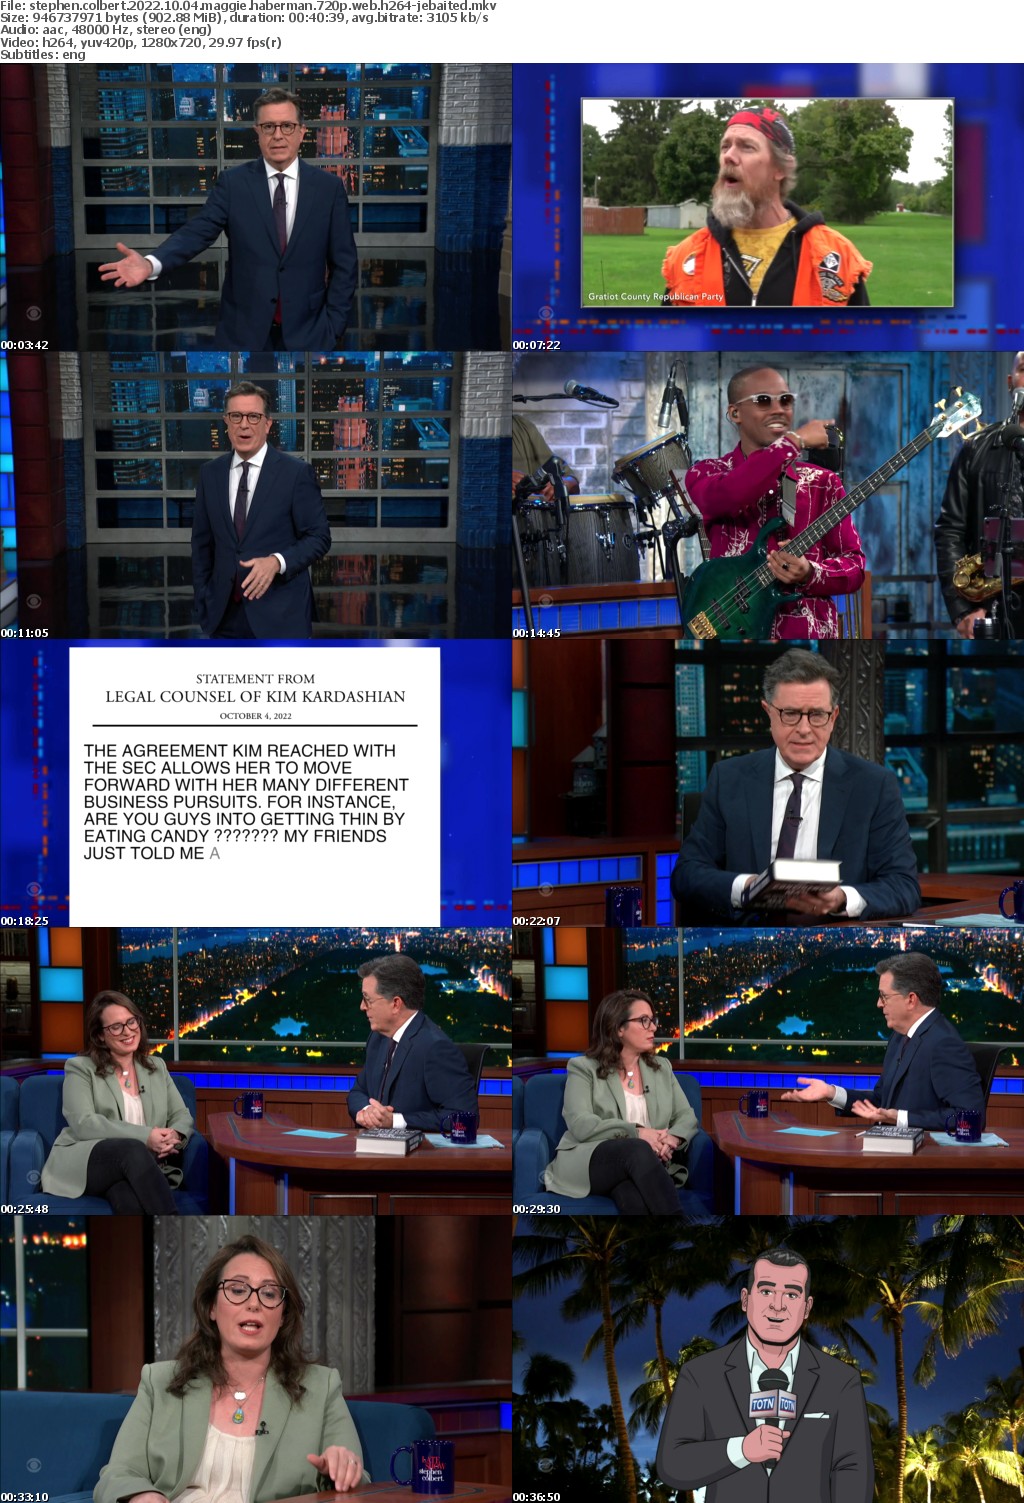 Stephen Colbert 2022 10 04 Maggie Haberman 720p WEB H264-JEBAITED